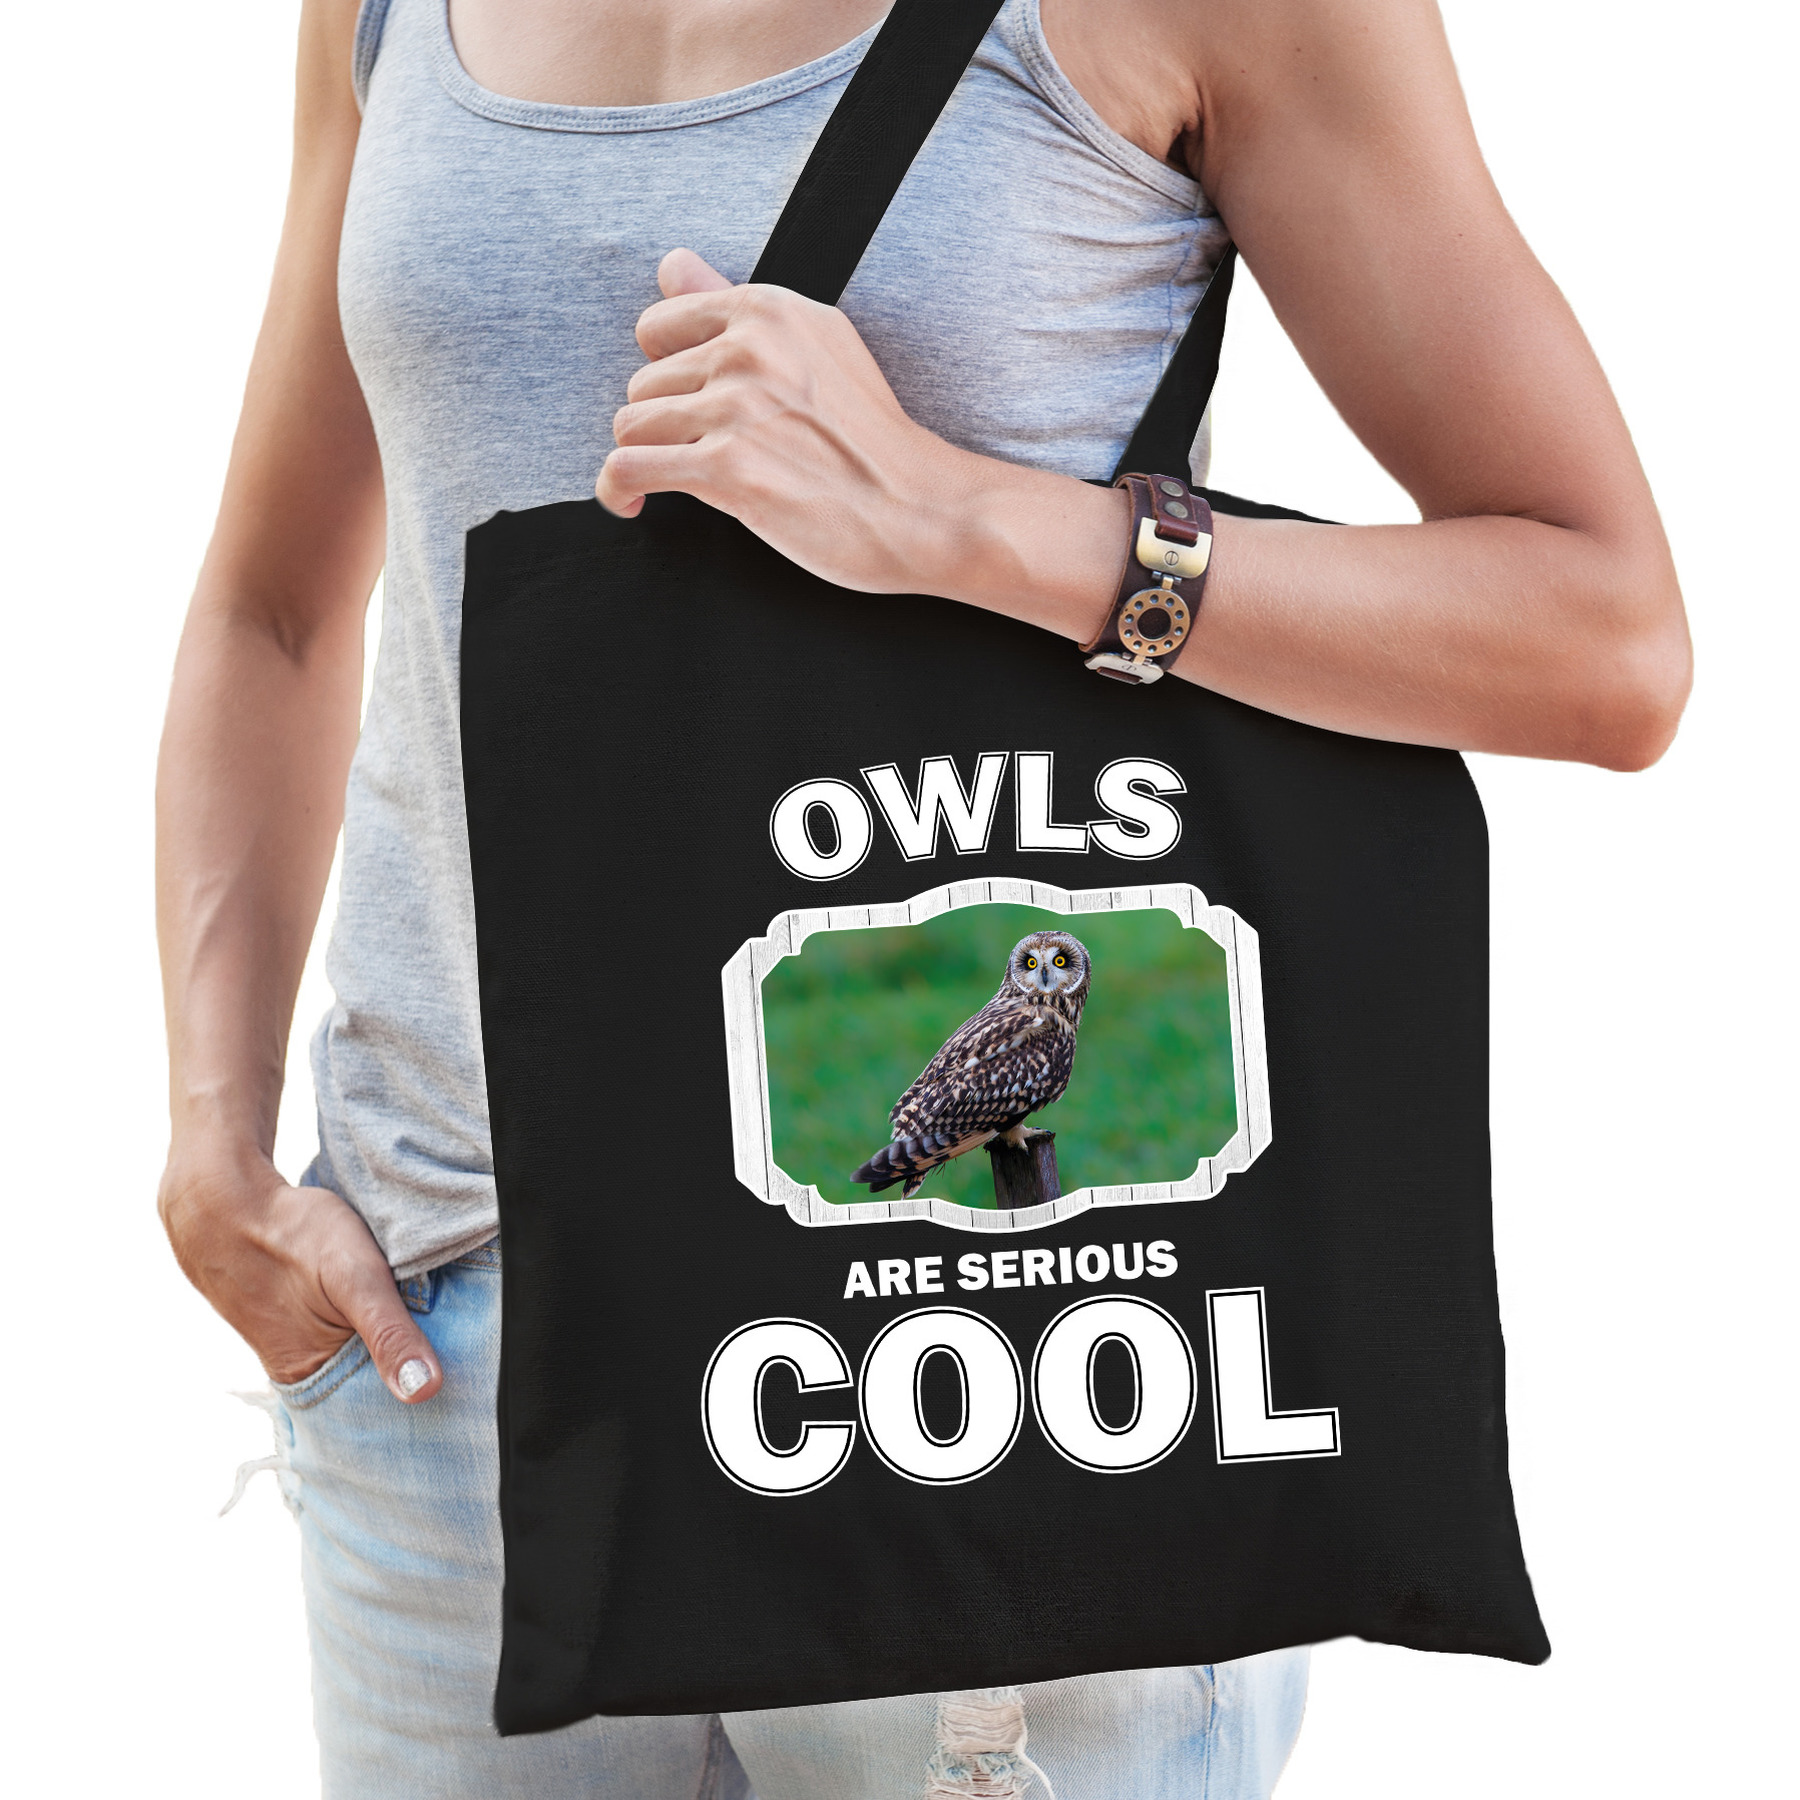 Katoenen tasje owls are serious cool zwart - uilen/ velduil cadeau tas